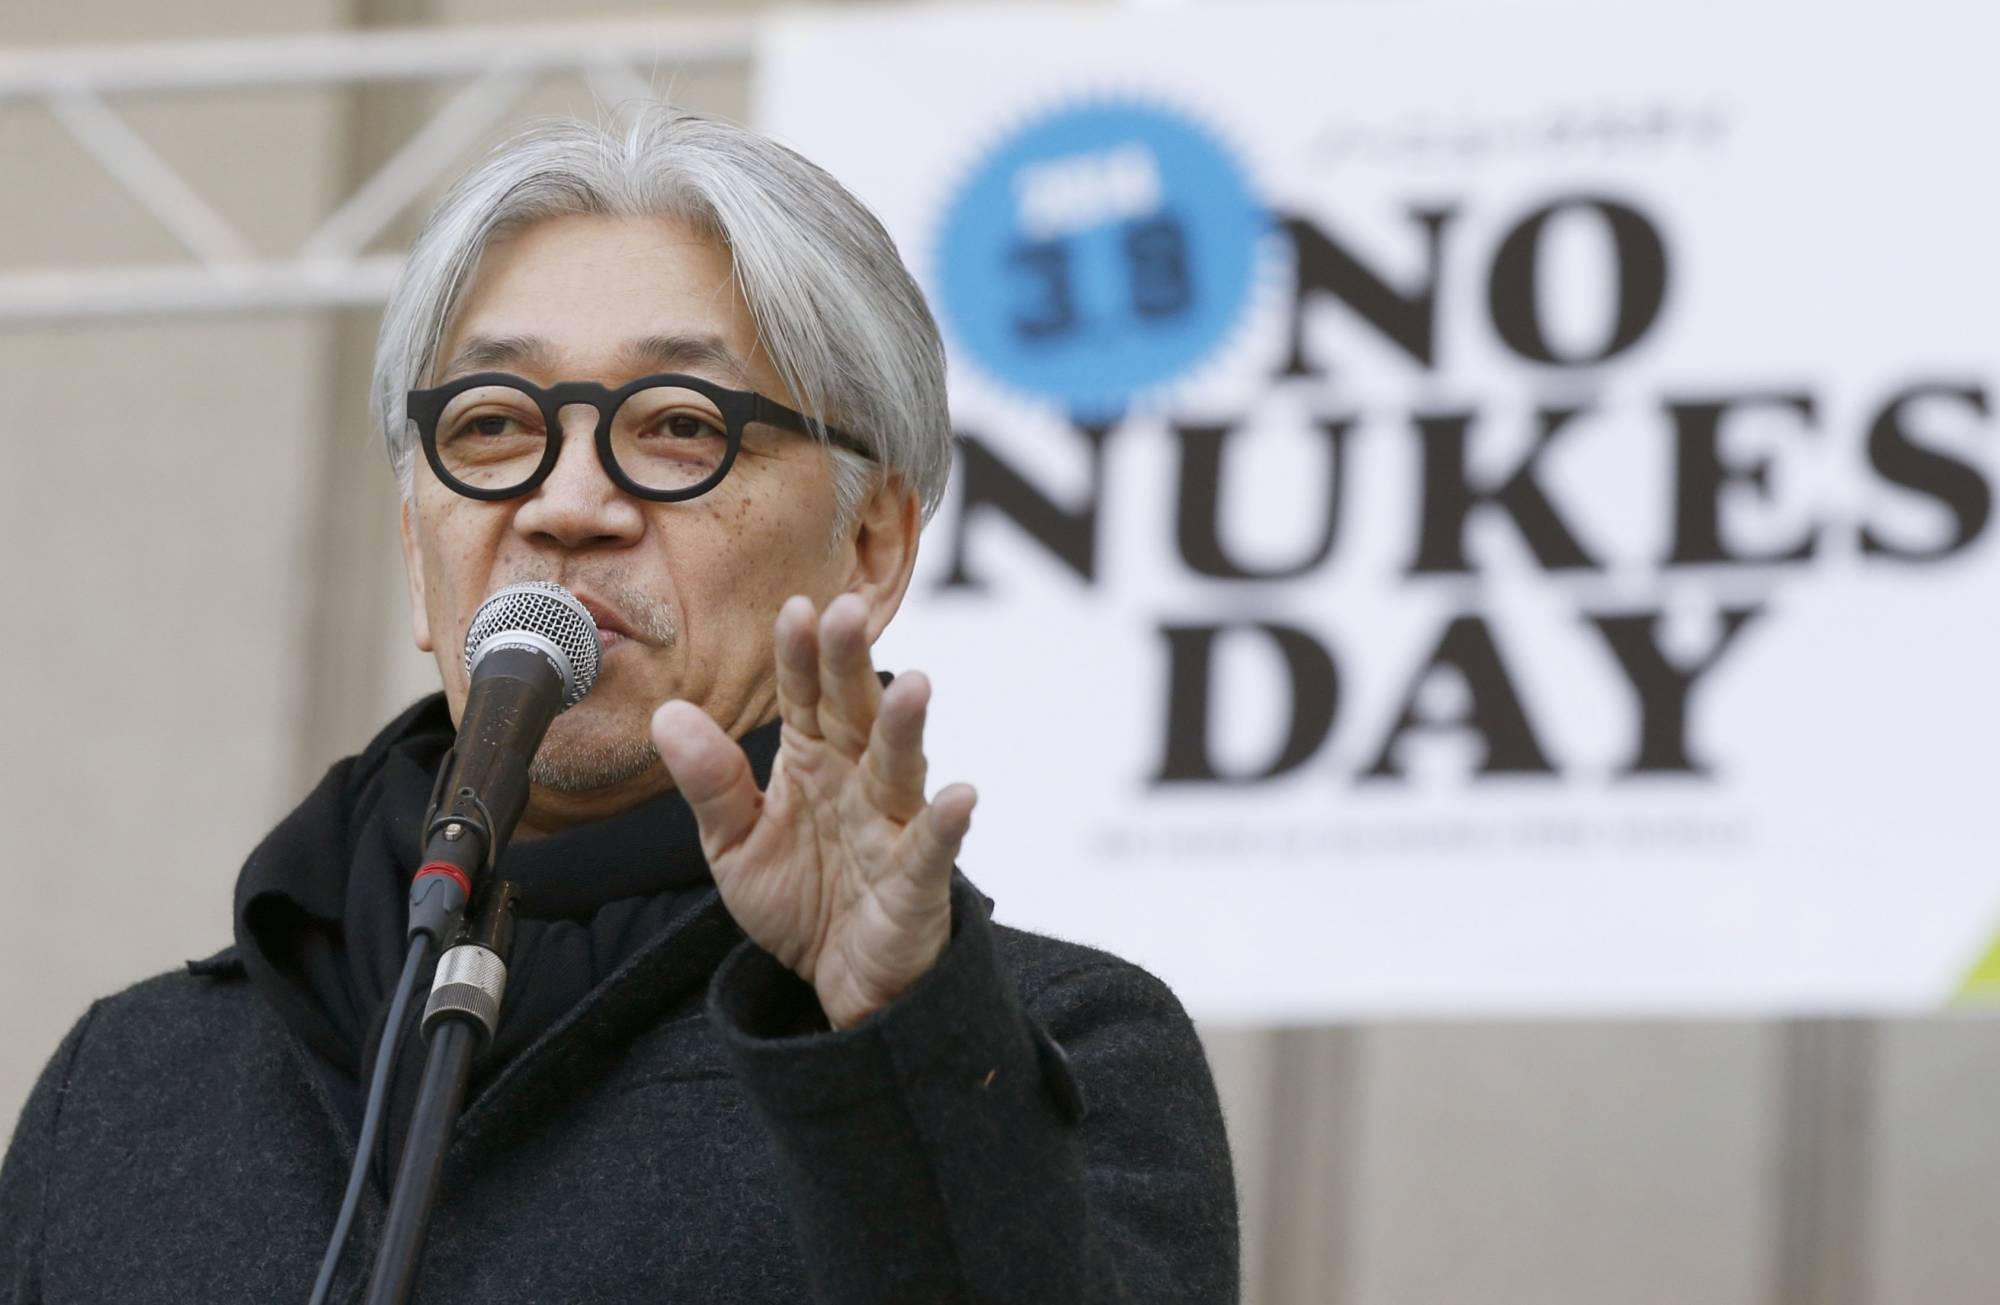 Ryuichi Sakamoto speaks at an anti-nuclear rally in Tokyo's Hibiya Park in March 2013. | KYODO